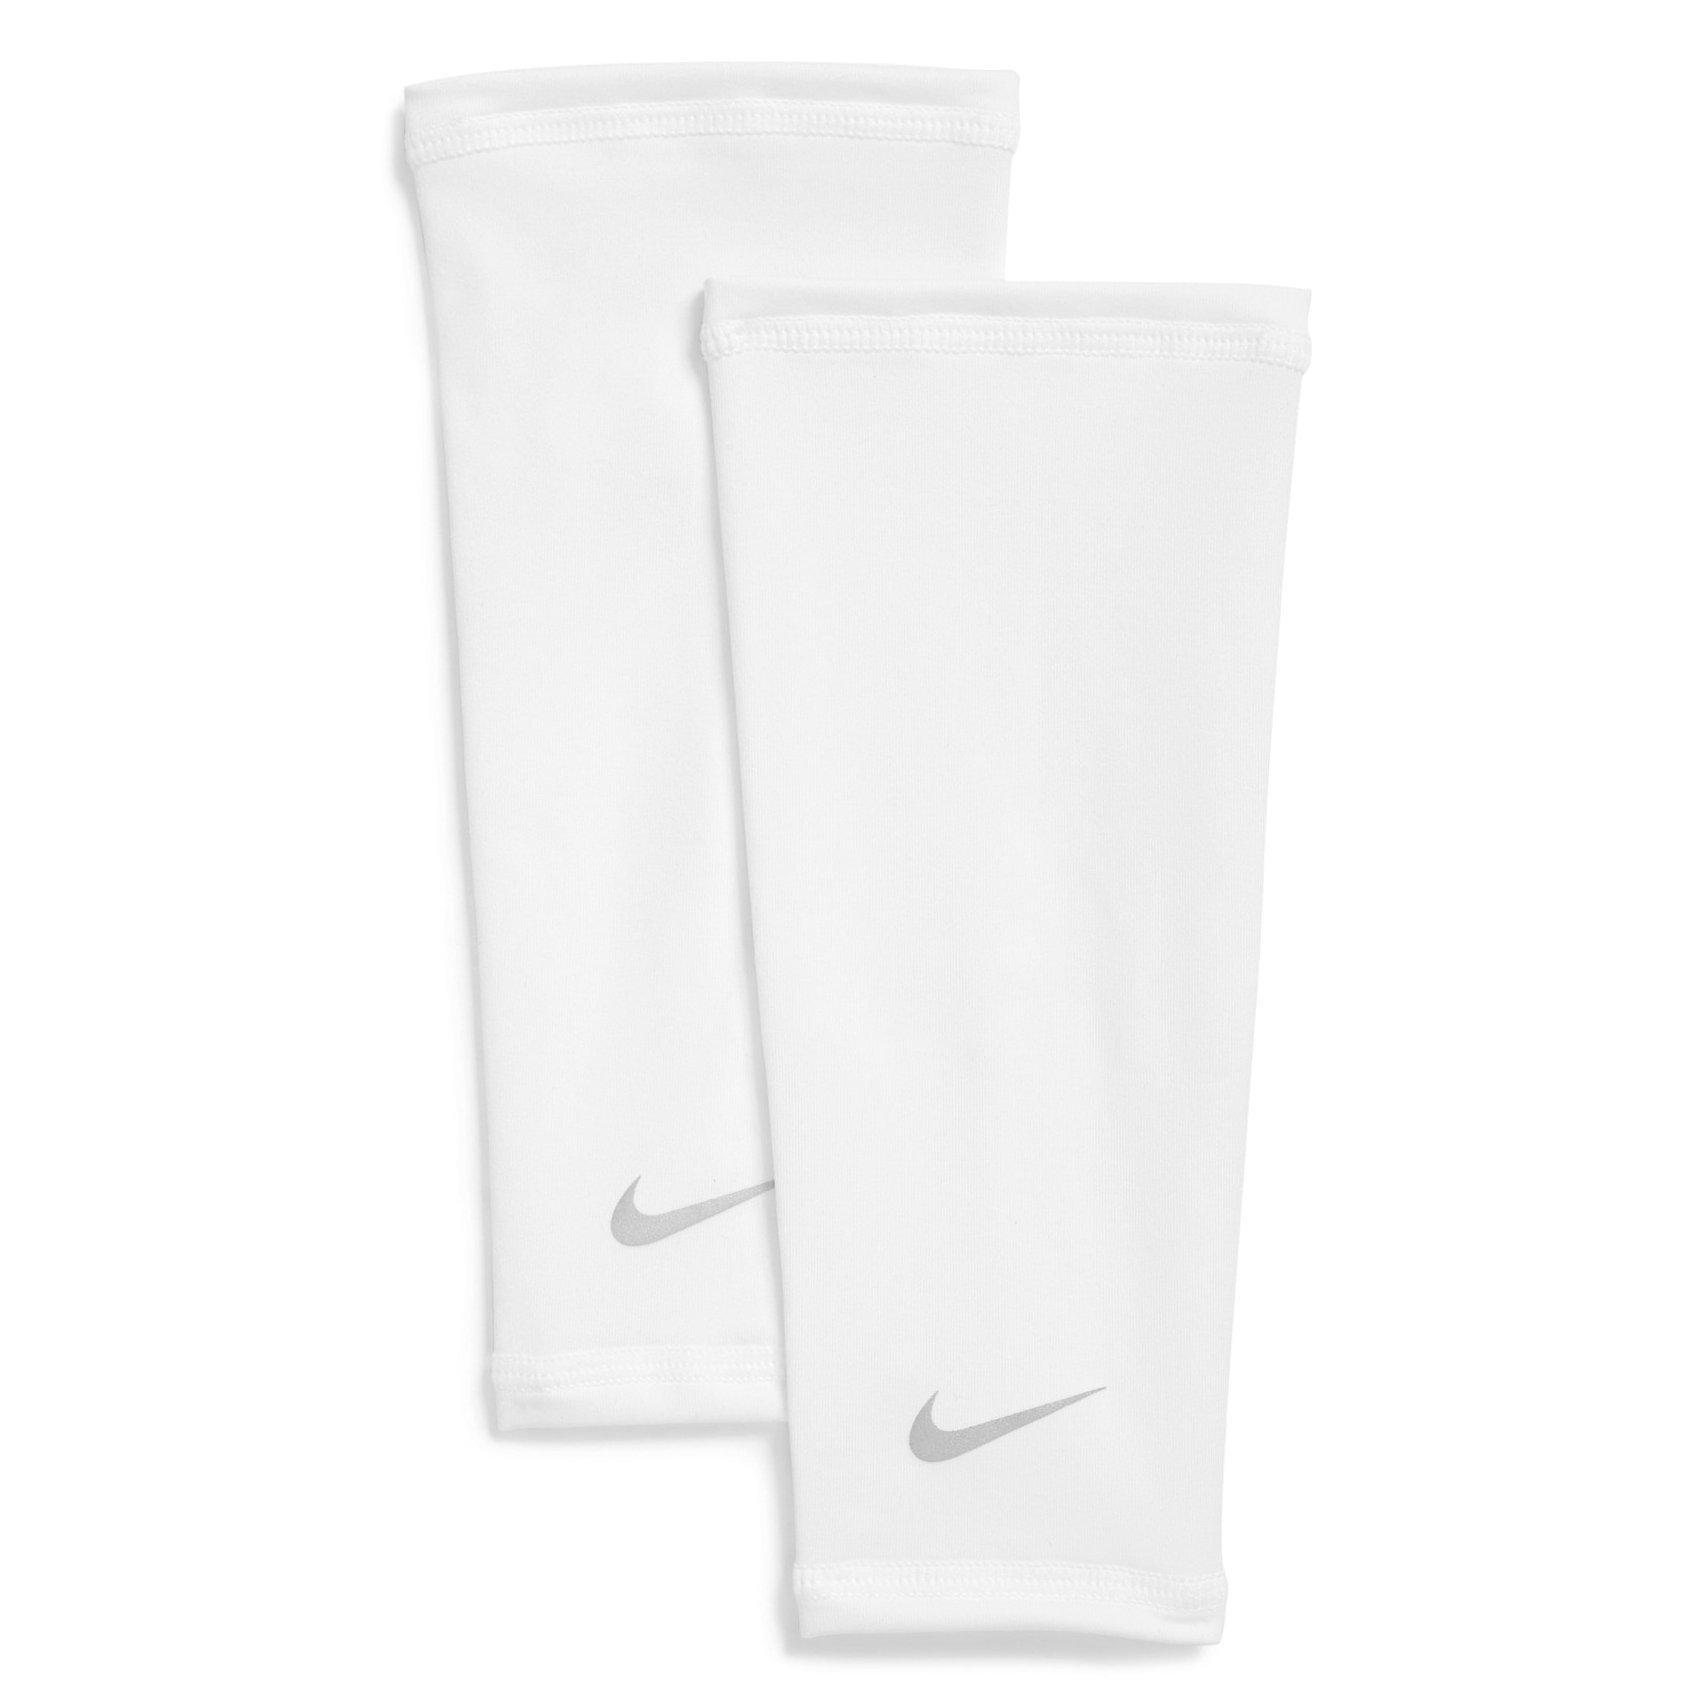 Nike Pro Combat Leg Sleeve Basketball